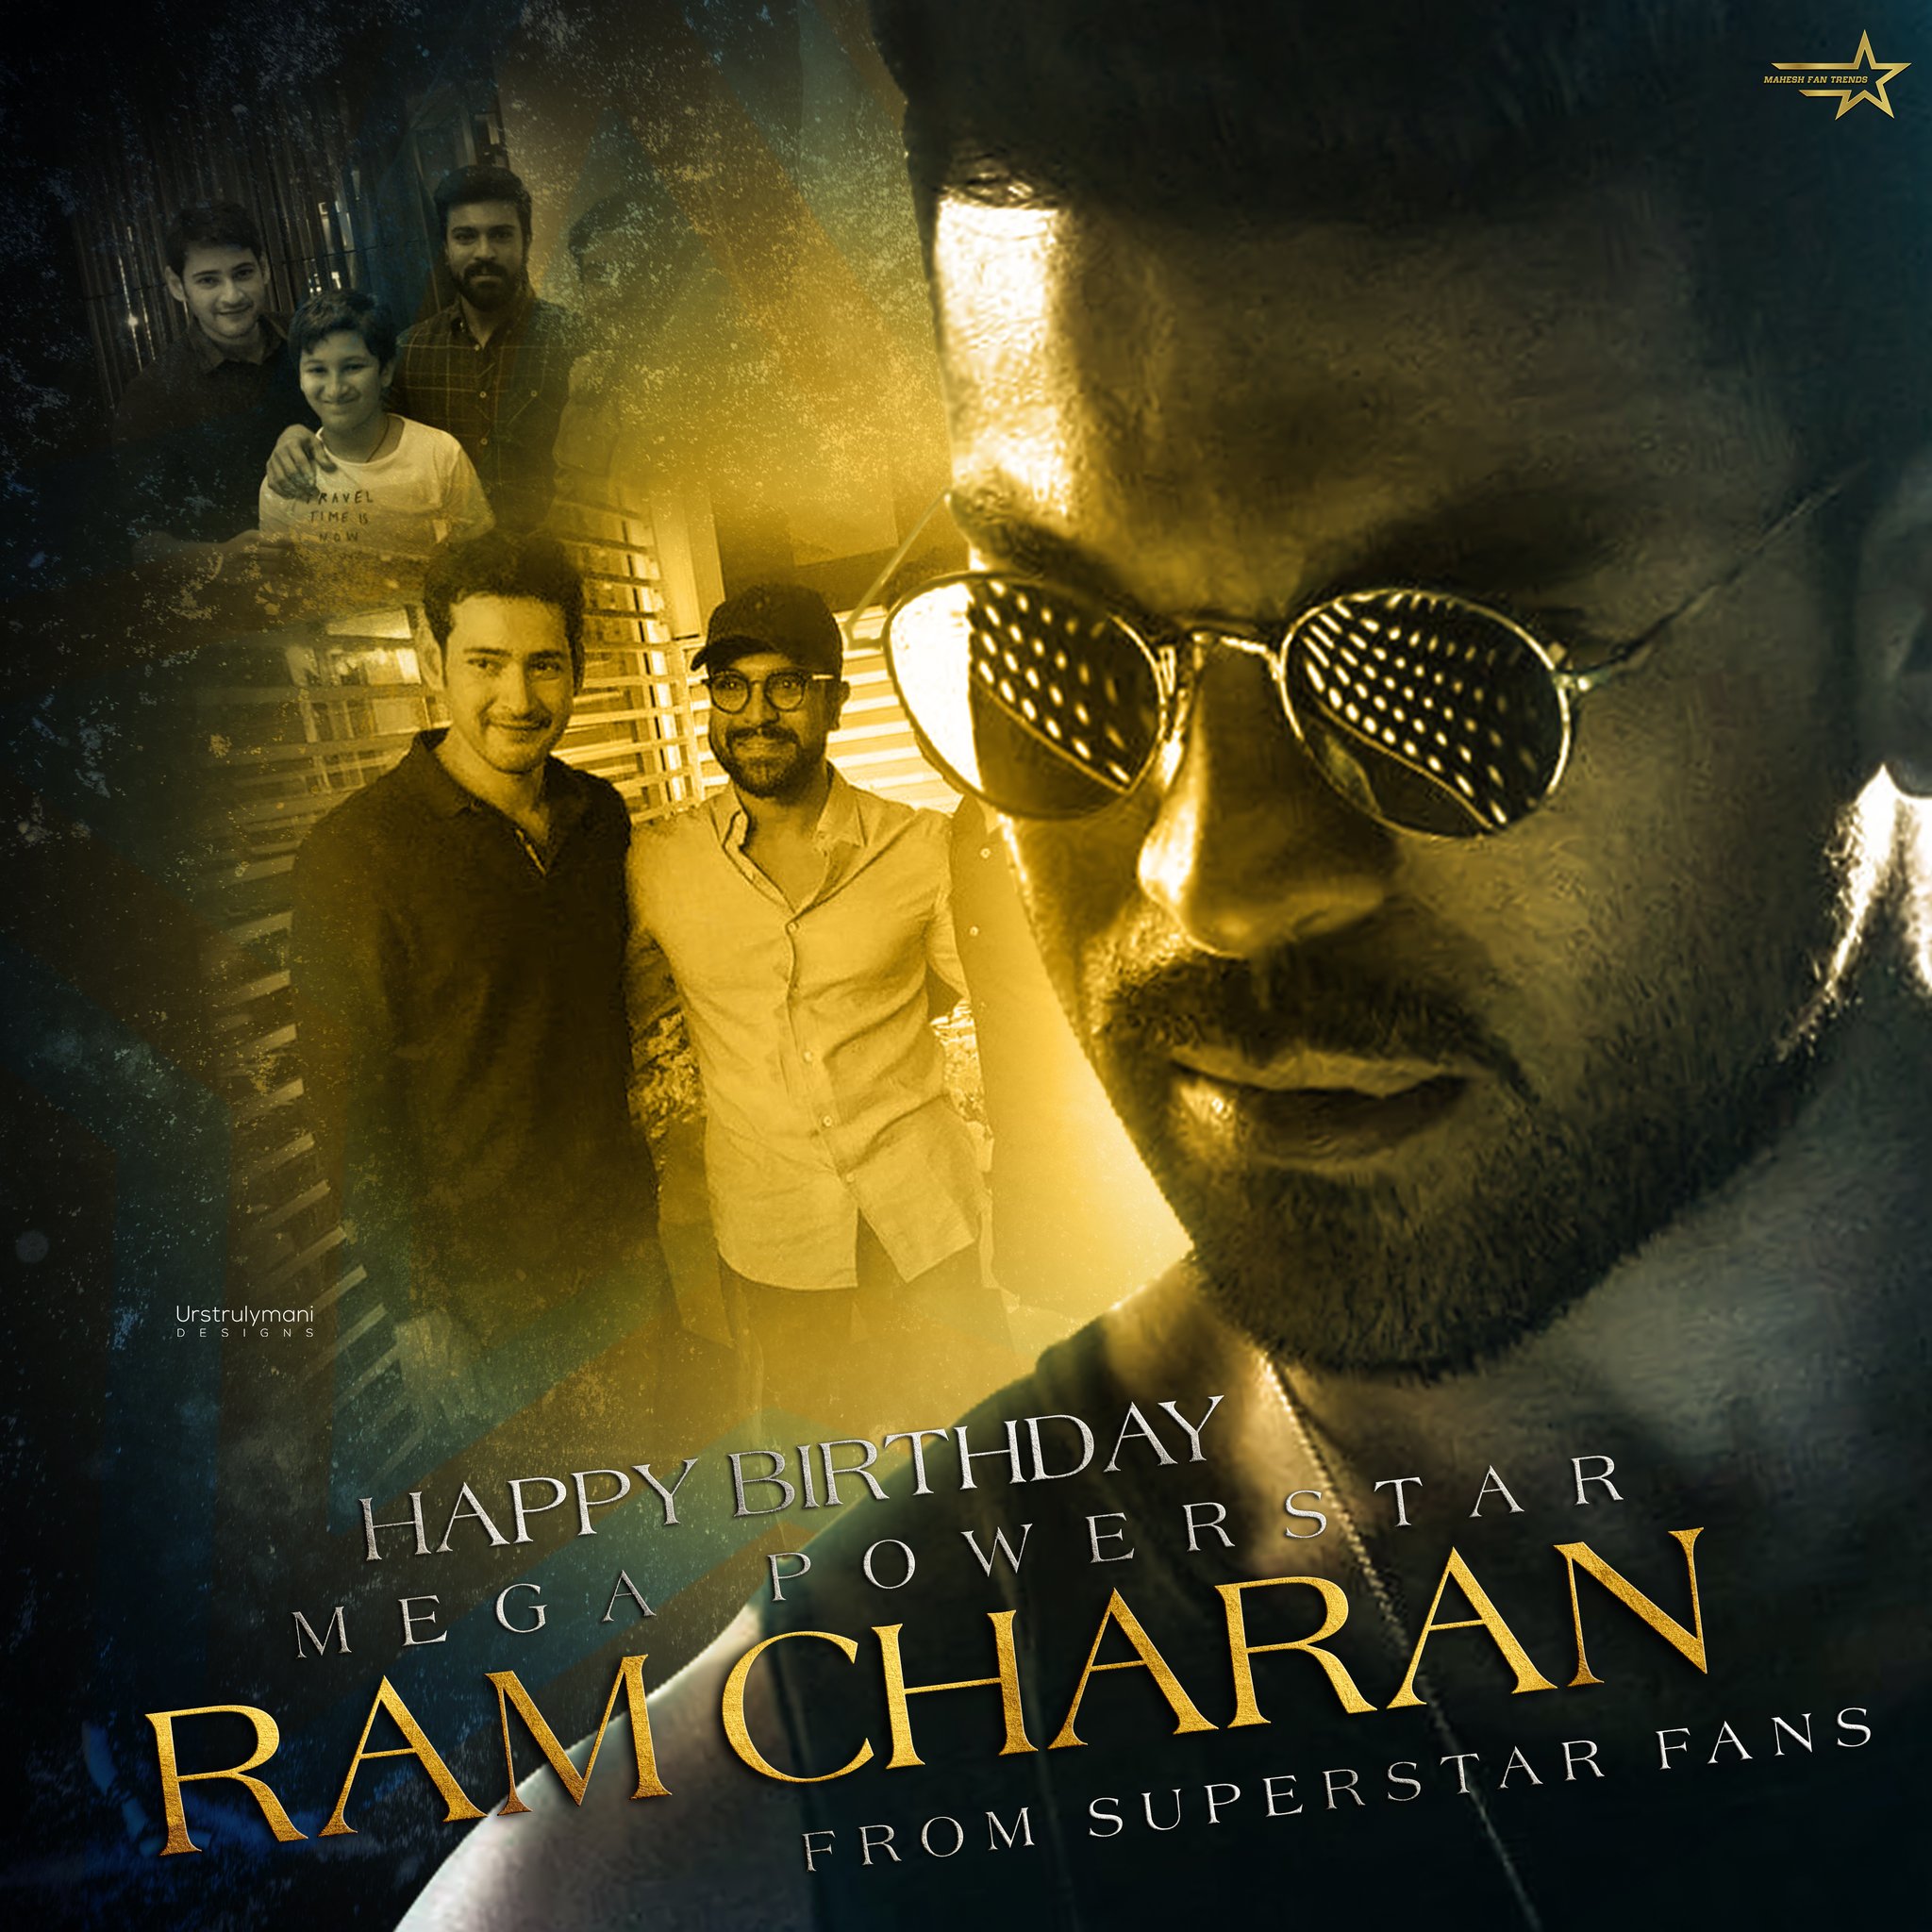 HAPPY birthdaY Ram charan Bro
From Maheshbabu Fans     